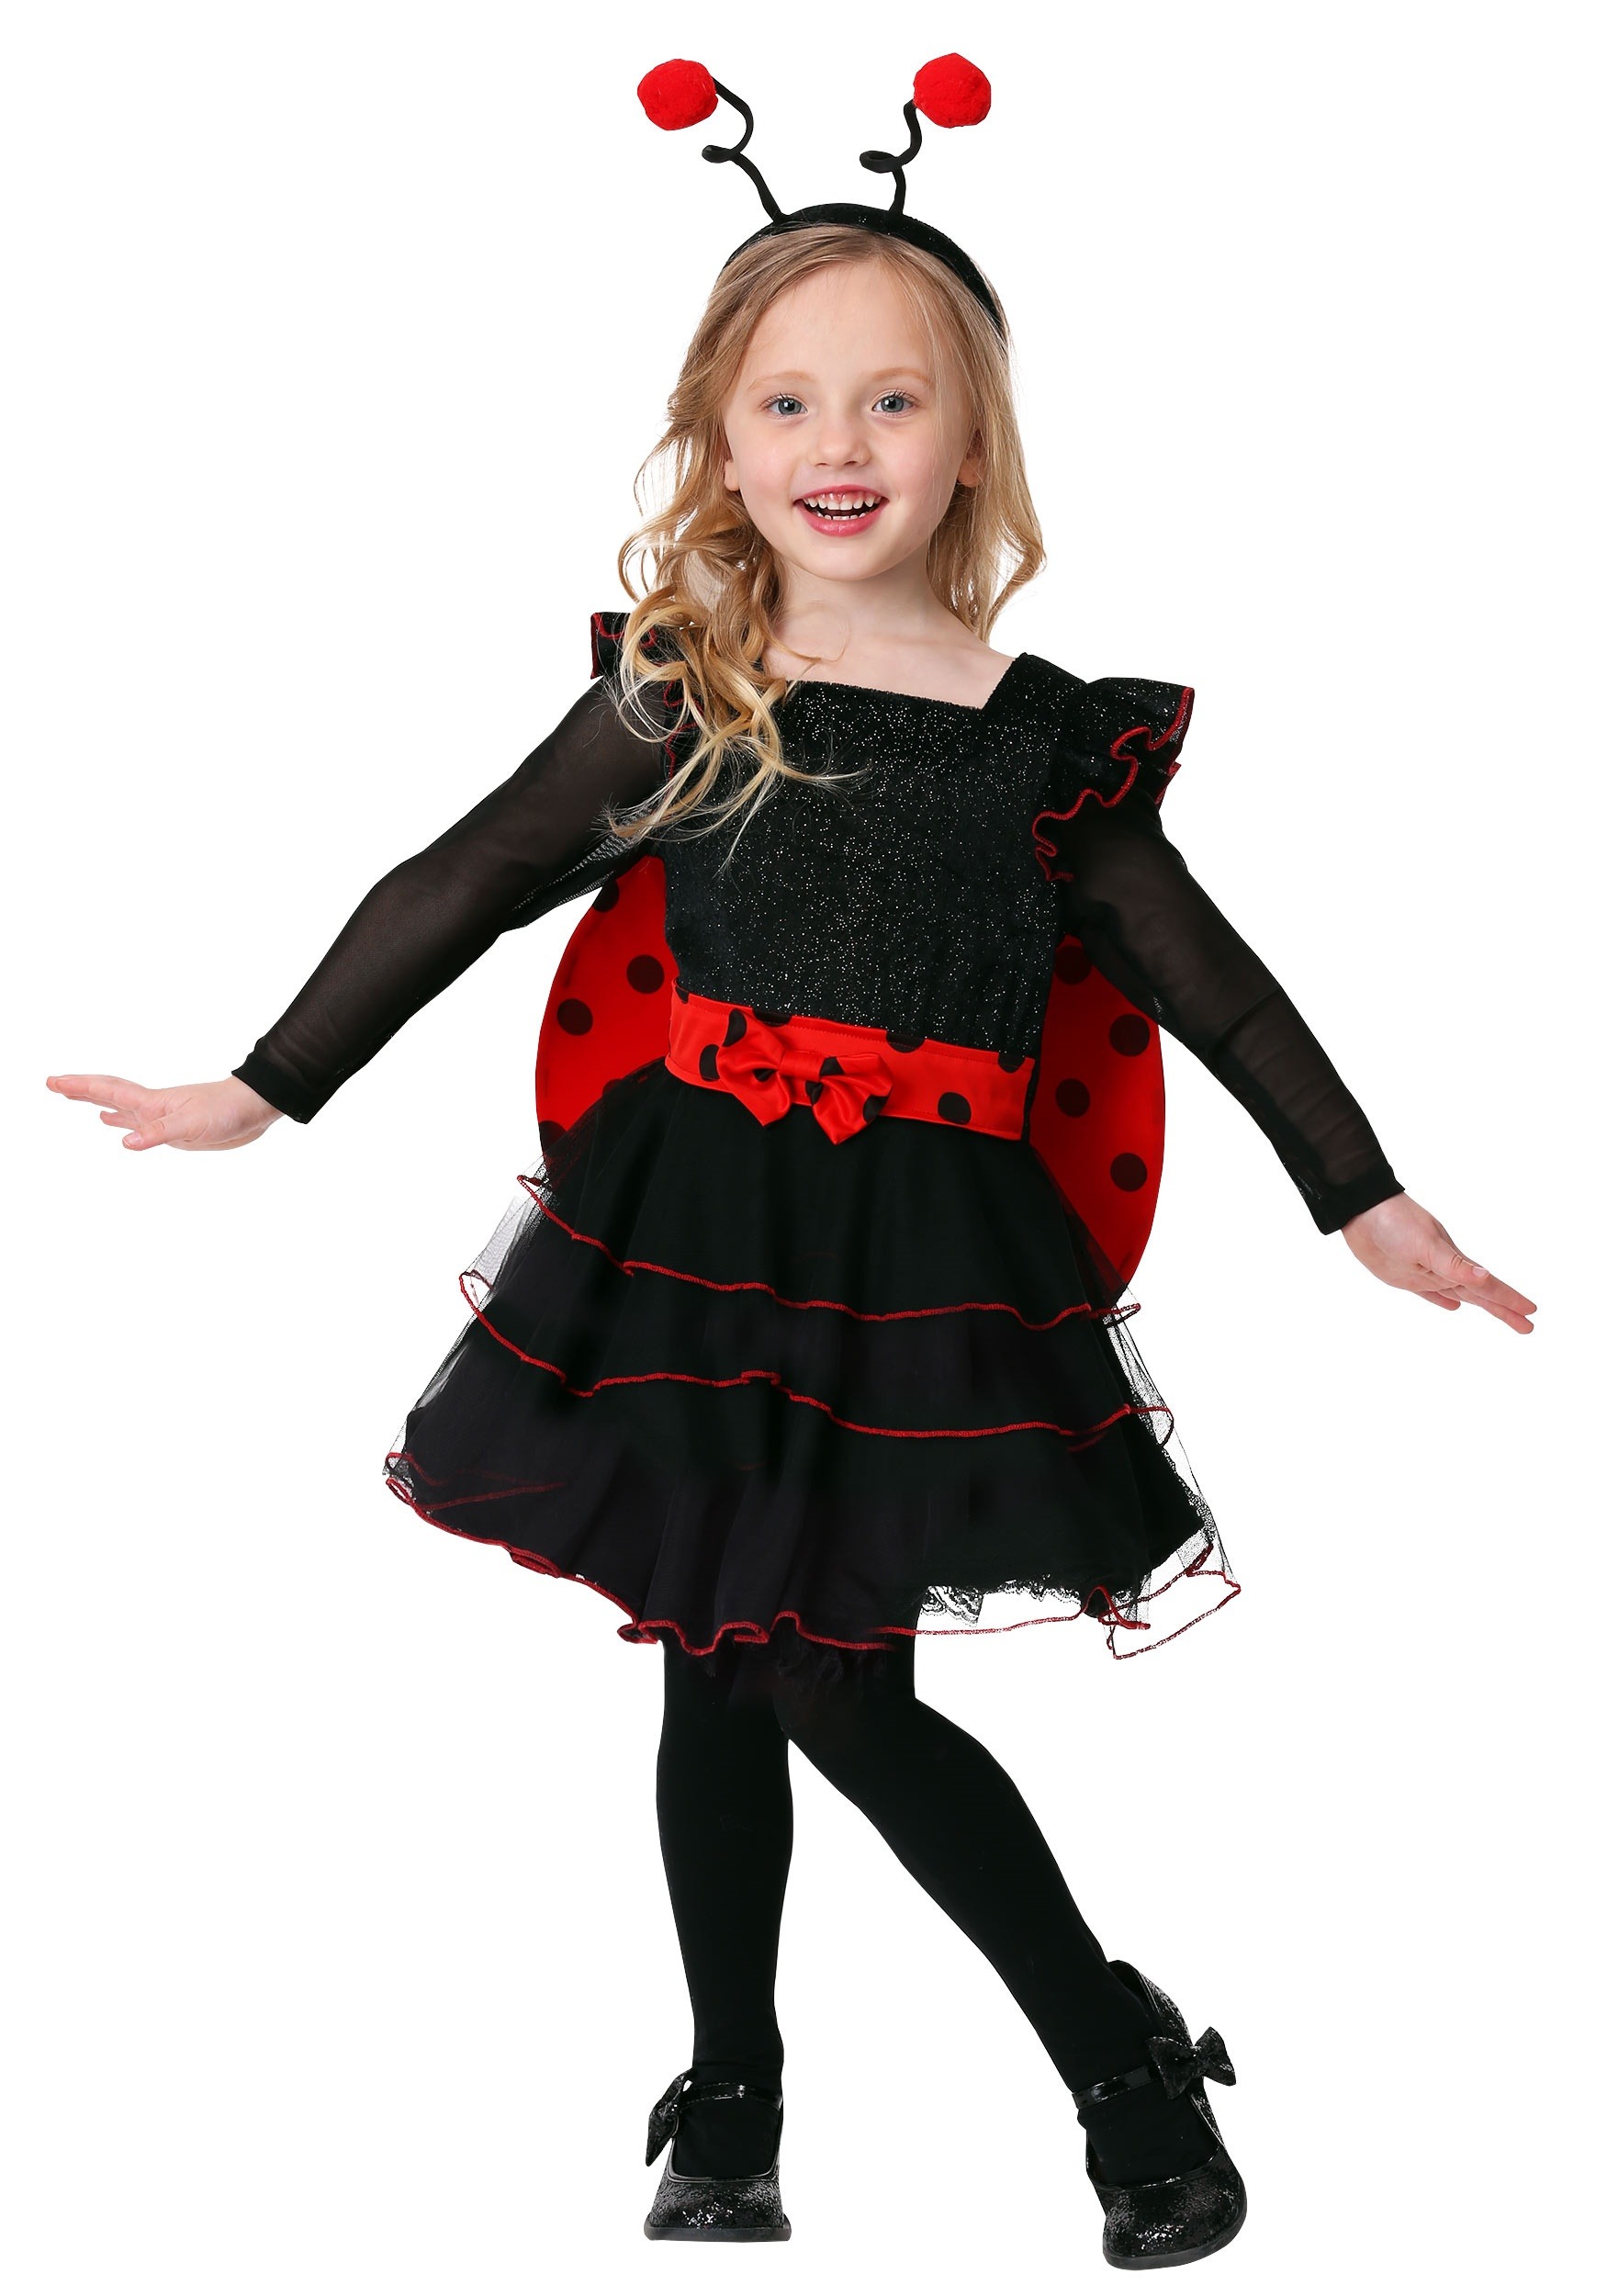 Photos - Fancy Dress Toddler FUN Costumes Girl's Sweet Ladybug Costume Black/Red FUN6463TD 